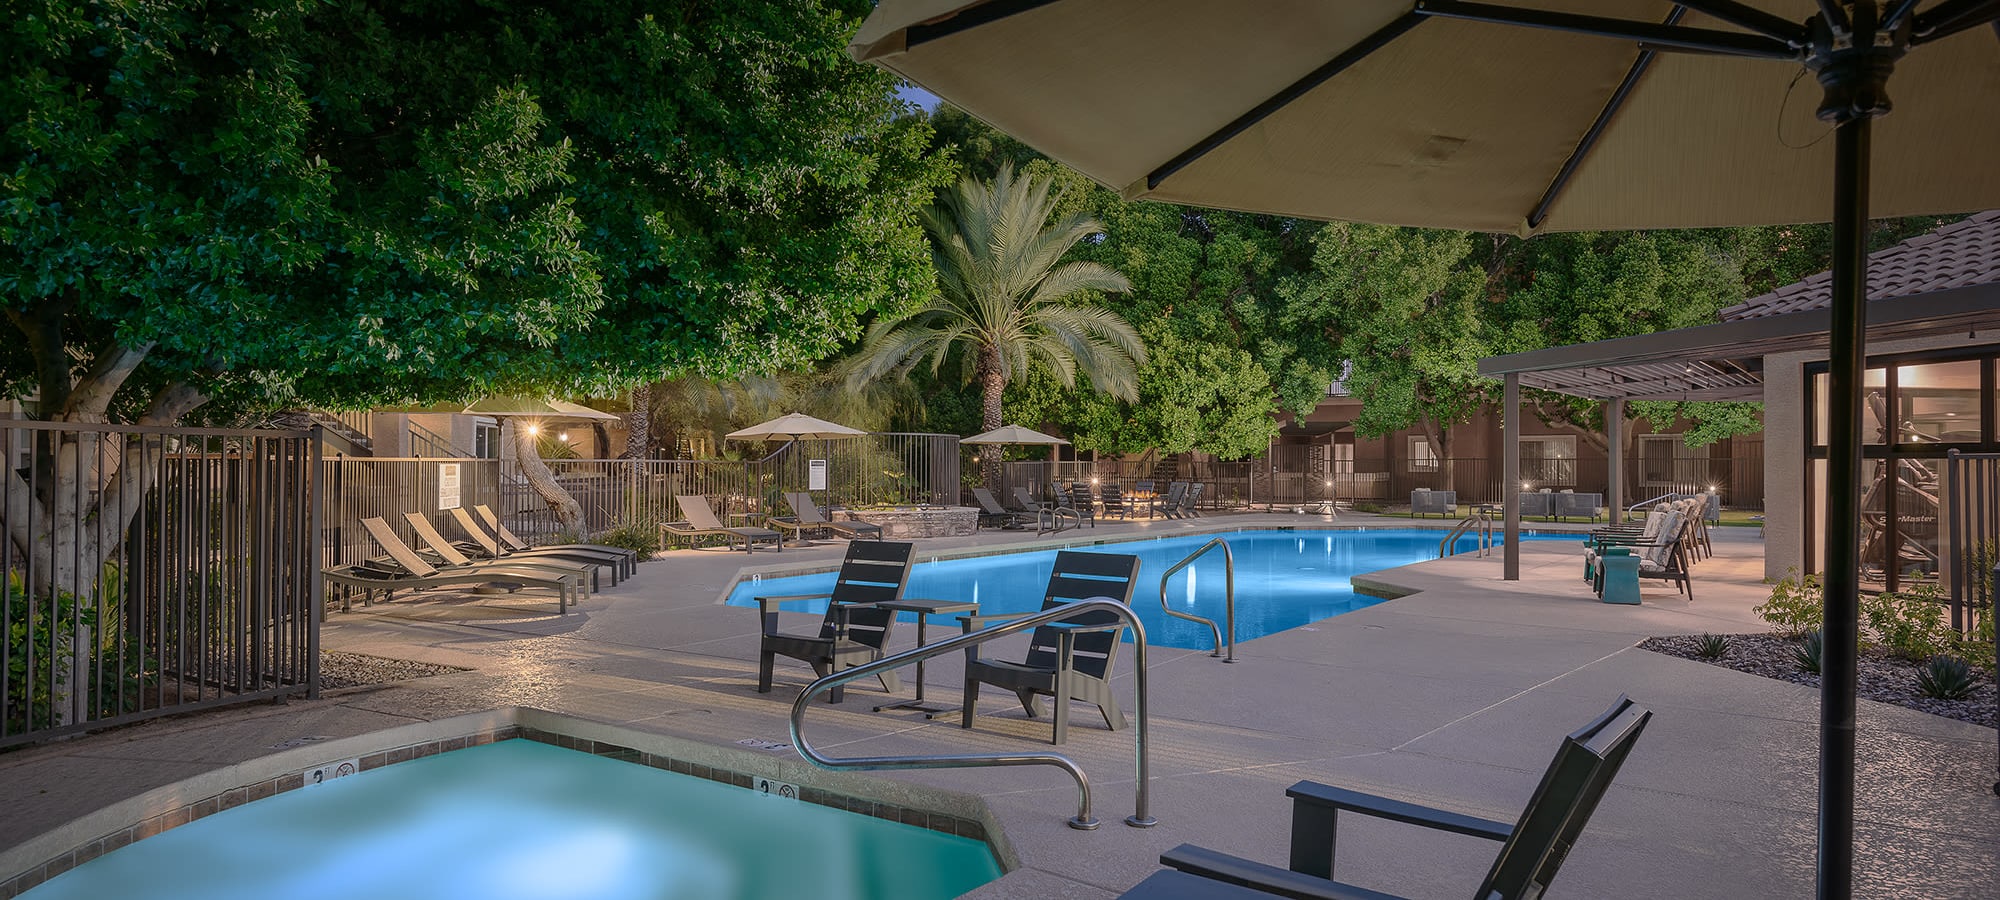 Resort-Style pool at The Regents at Scottsdale in Scottsdale, Arizona